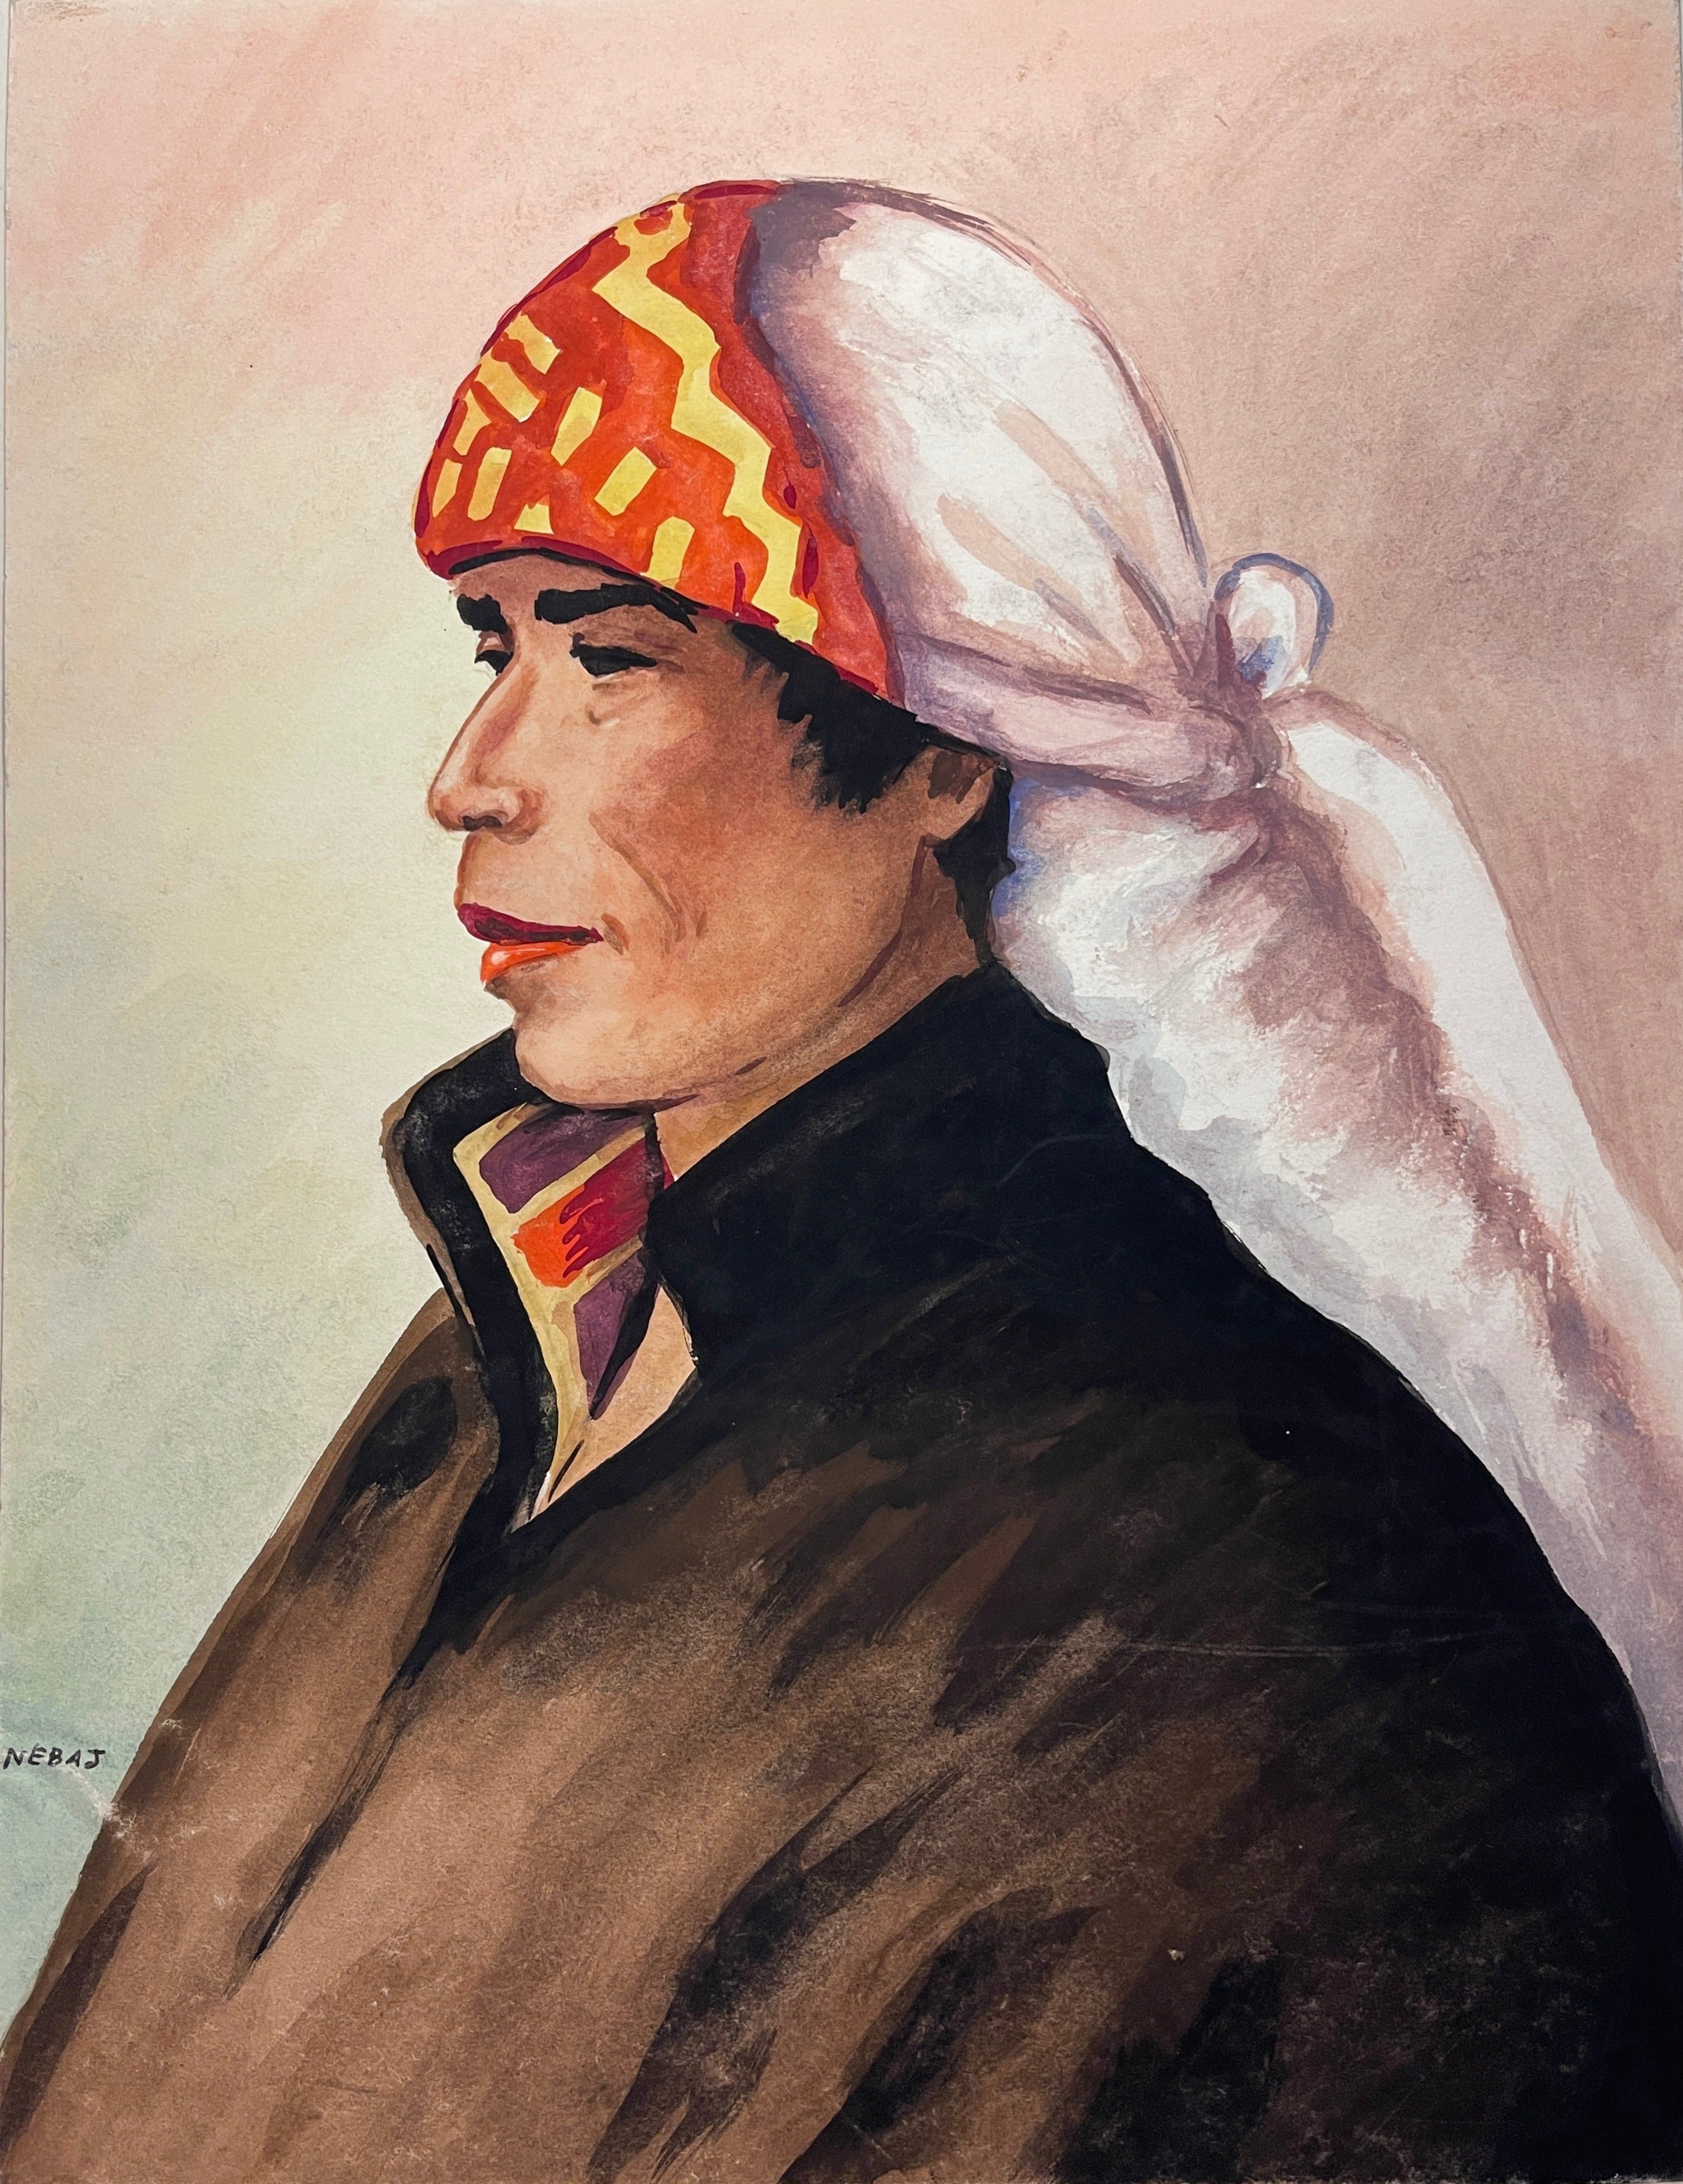 Maria Navas 1950 Signed Watercolor Painting - Mayan Man Portrait - Nebaj at Adirondack Retro